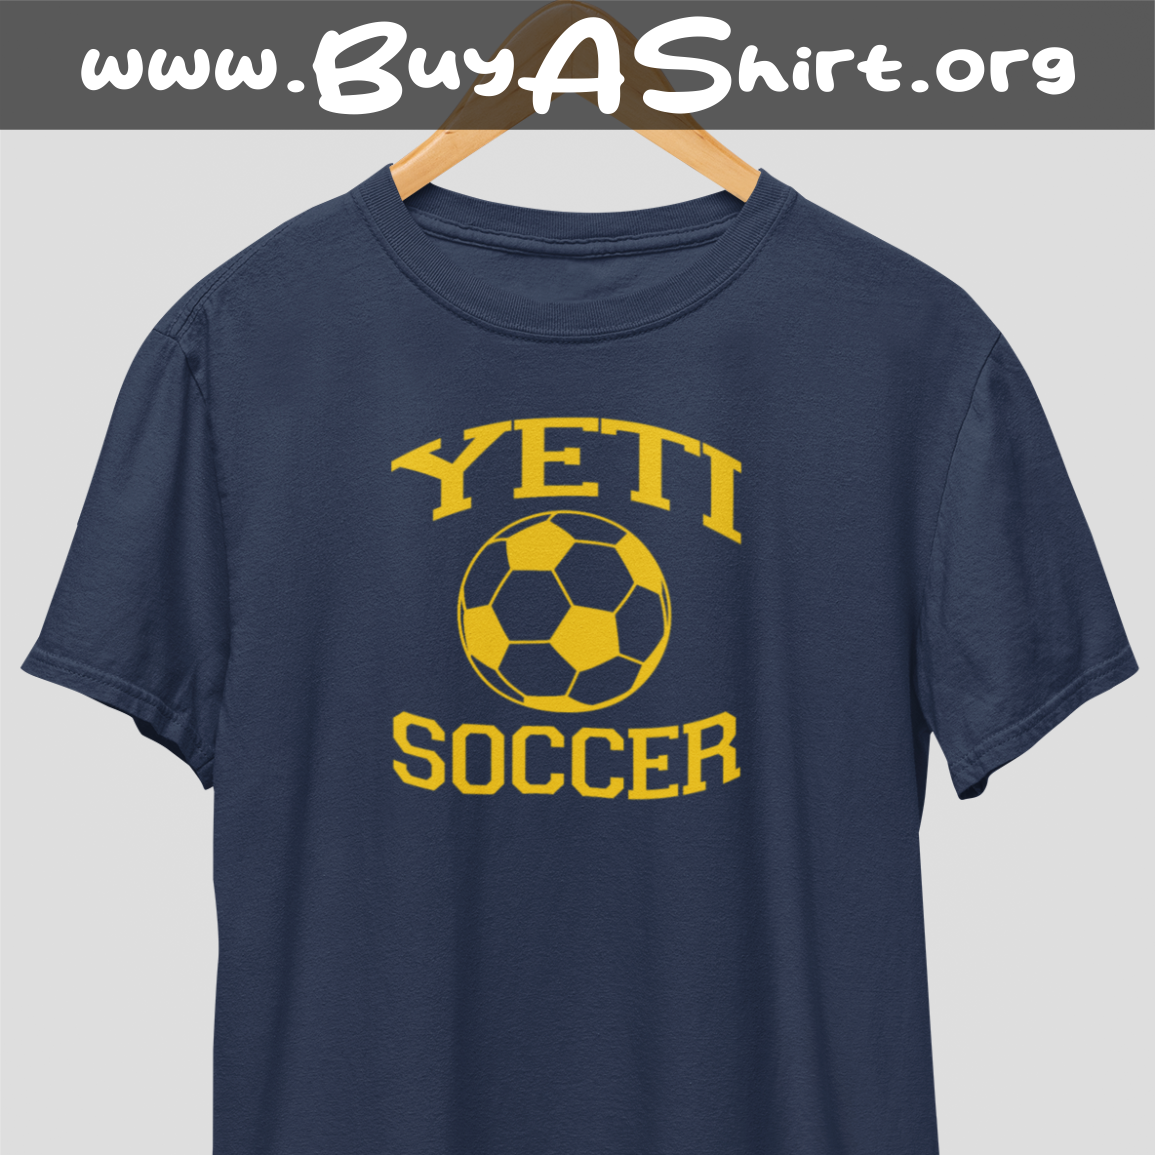 Yeti Soccer Yellow Gold Print T-Shirt